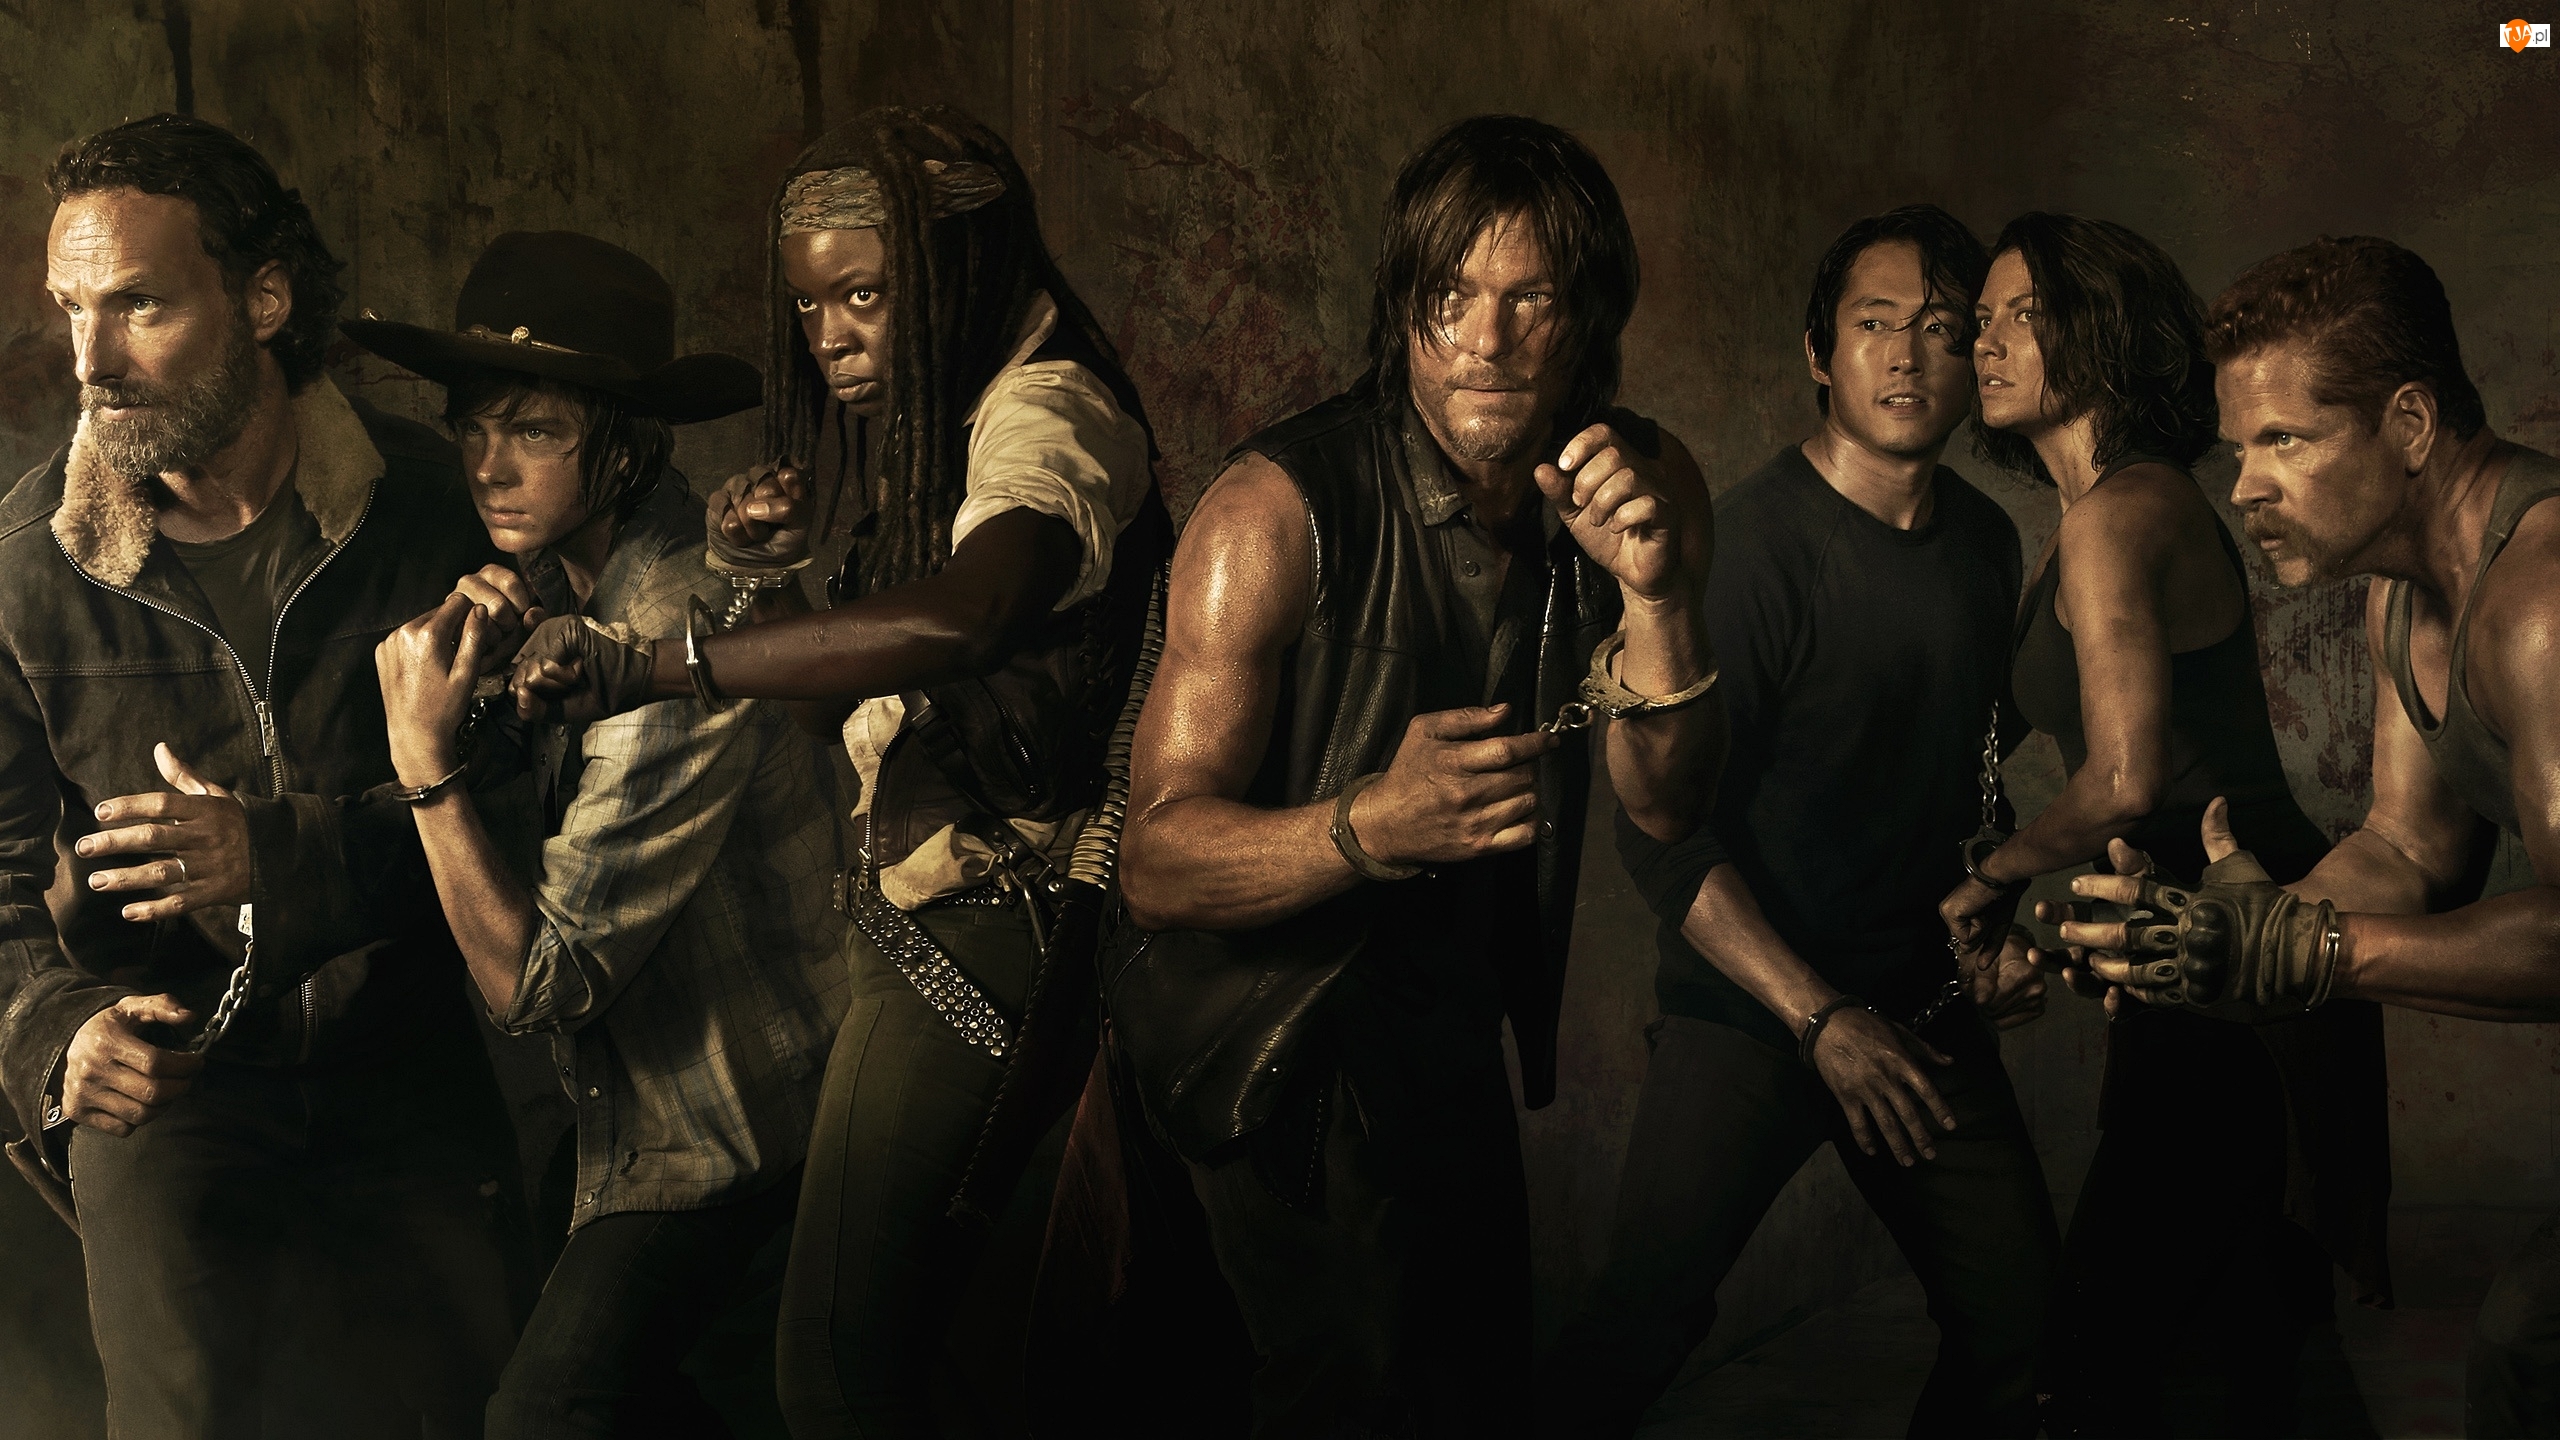 Abraham, Daryl - Norman Reedus, Glenn, Michonne, The Walking Dead, Serial, Rick, Żywe trupy, Carl, Maggie